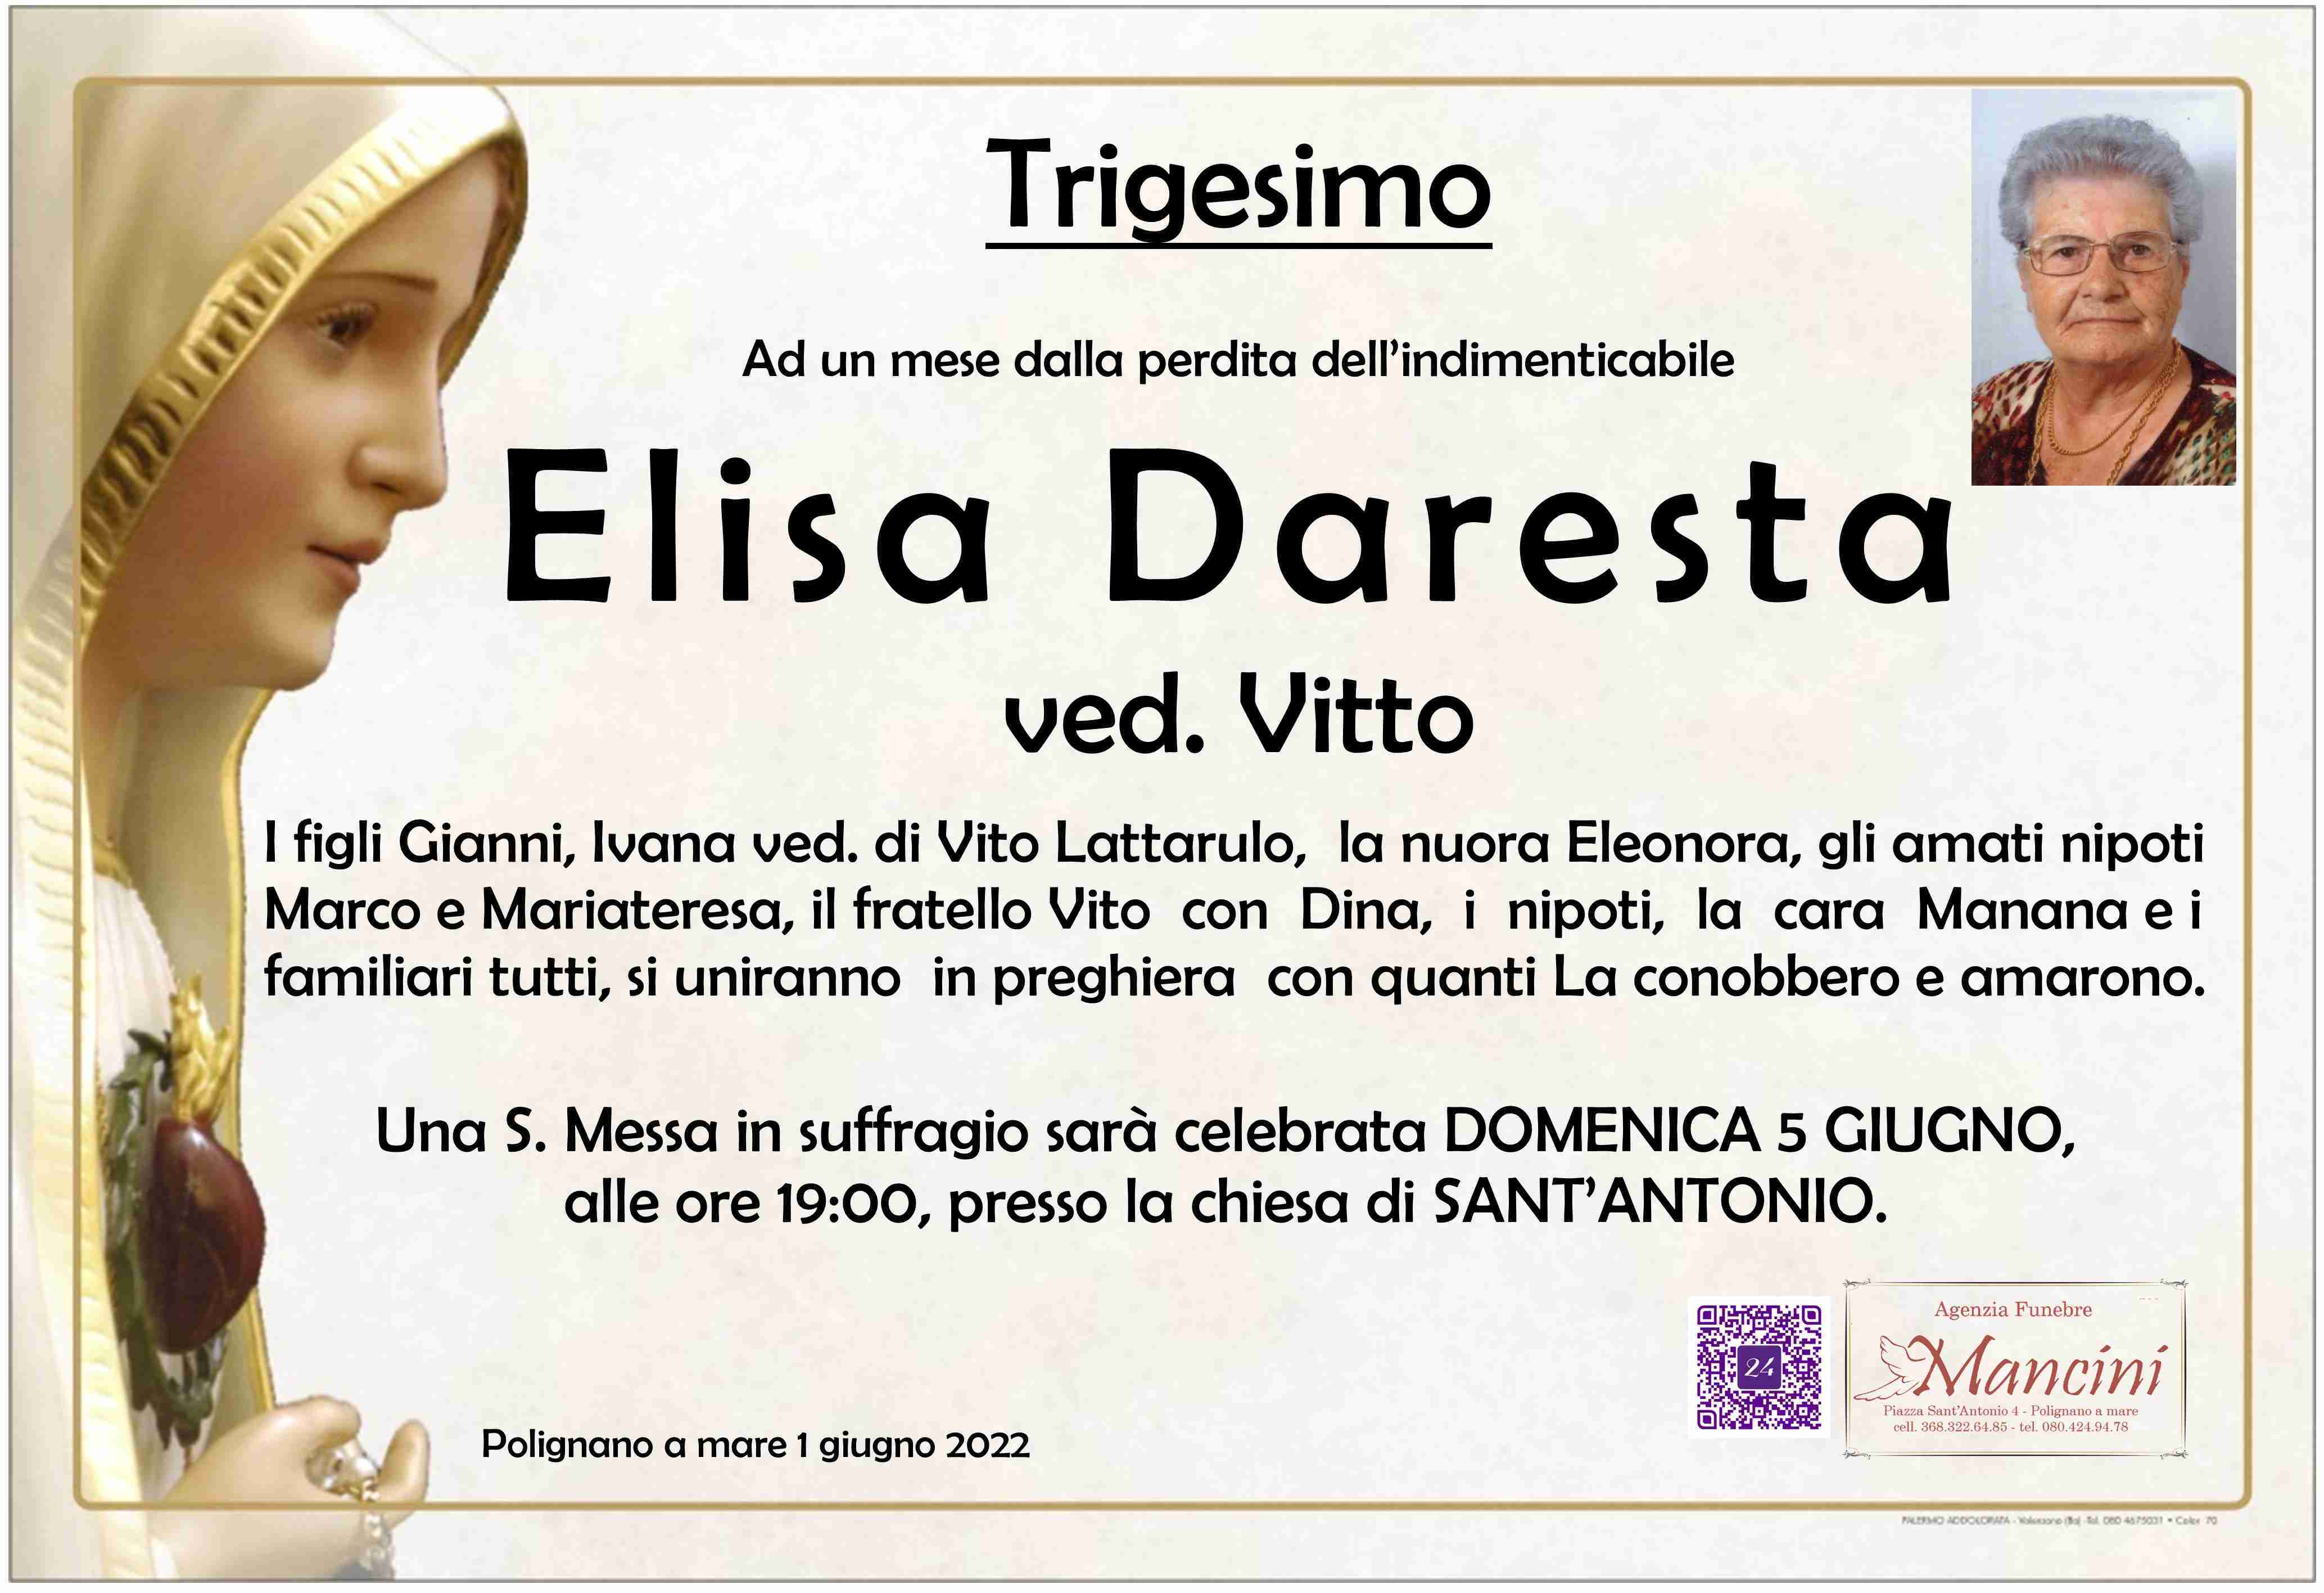 Elisa Daresta